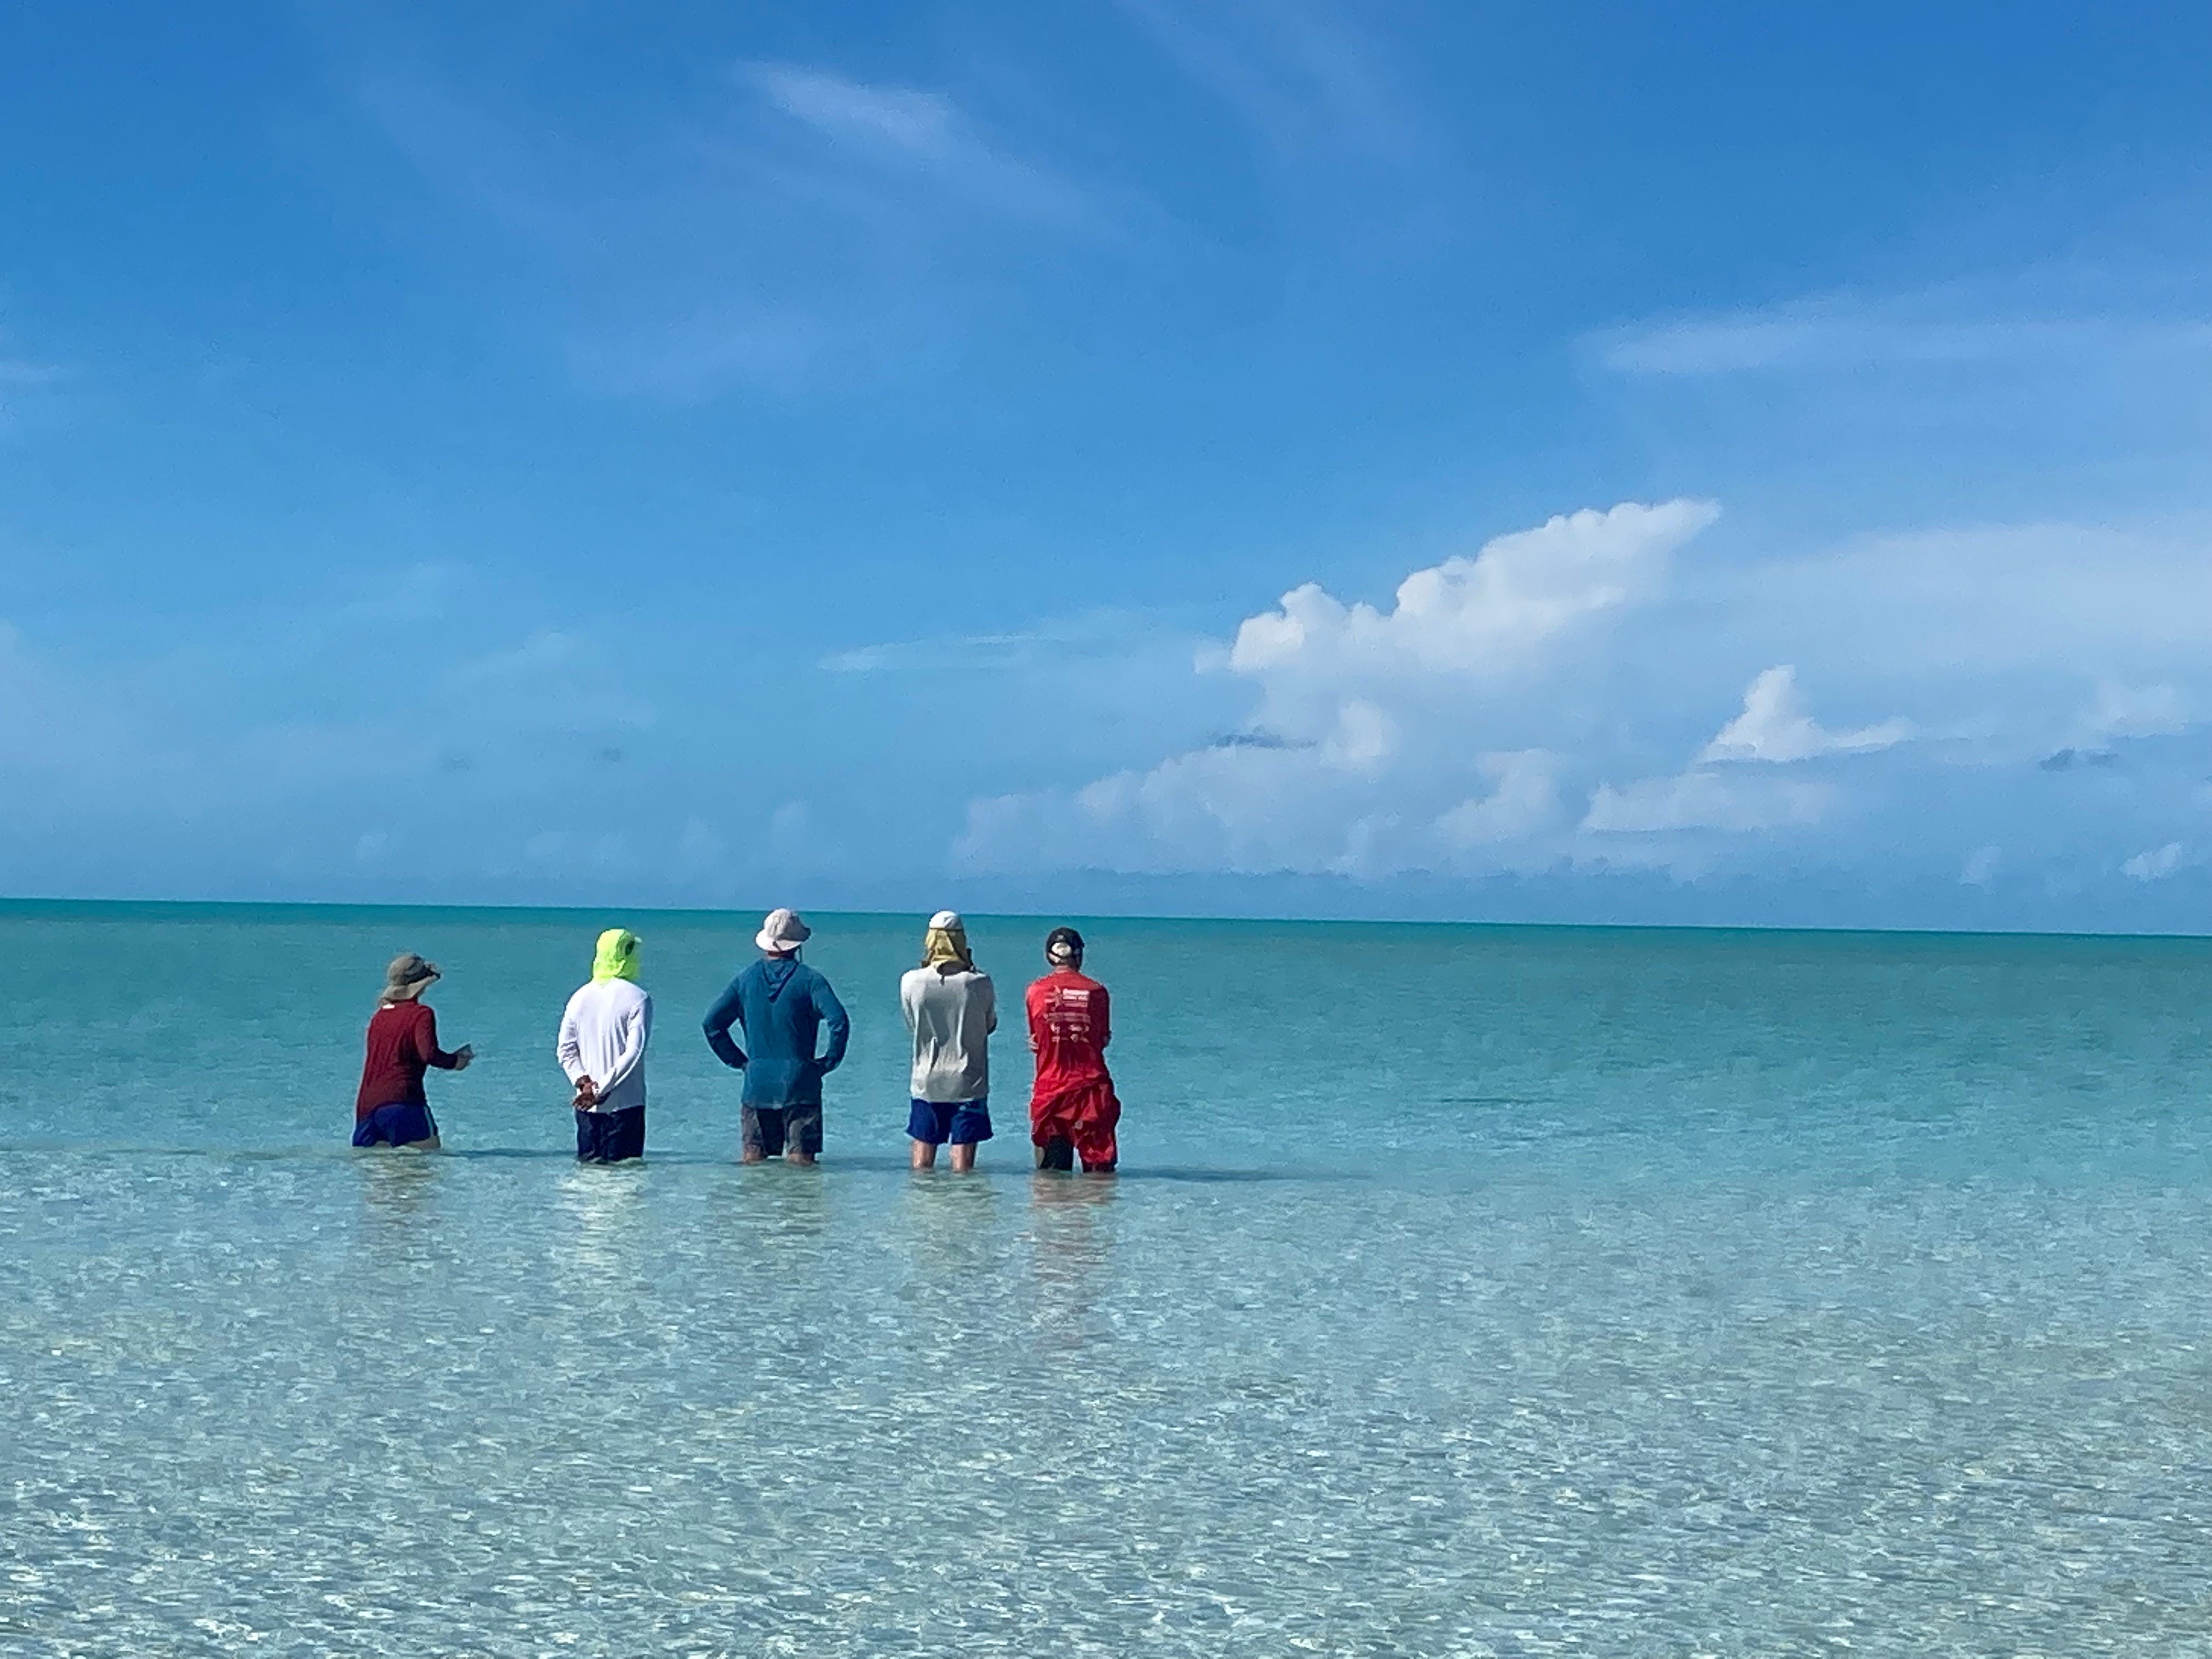 5 NOLS alumni standing in the calm water looking out across the open ocean